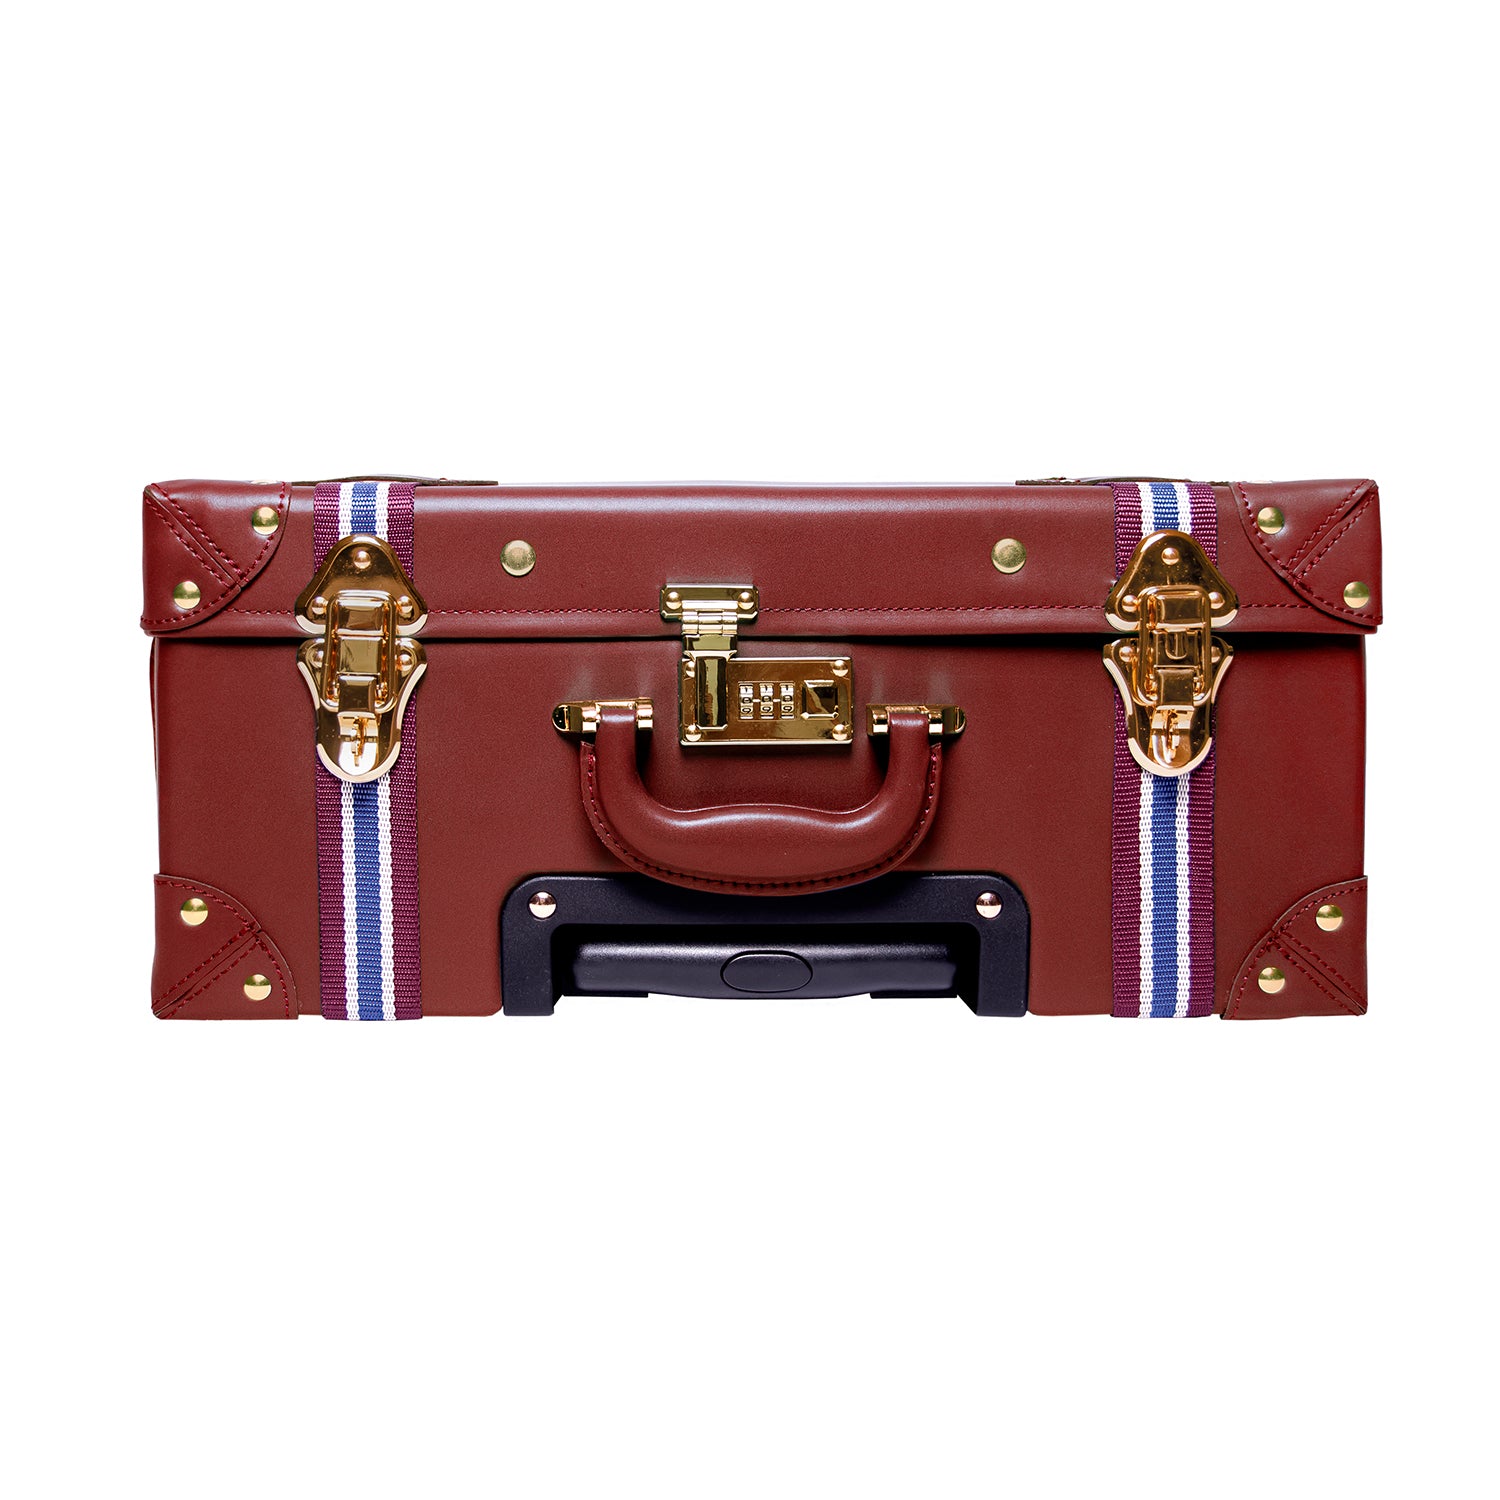 The Cambridge Burgundy Suitcase